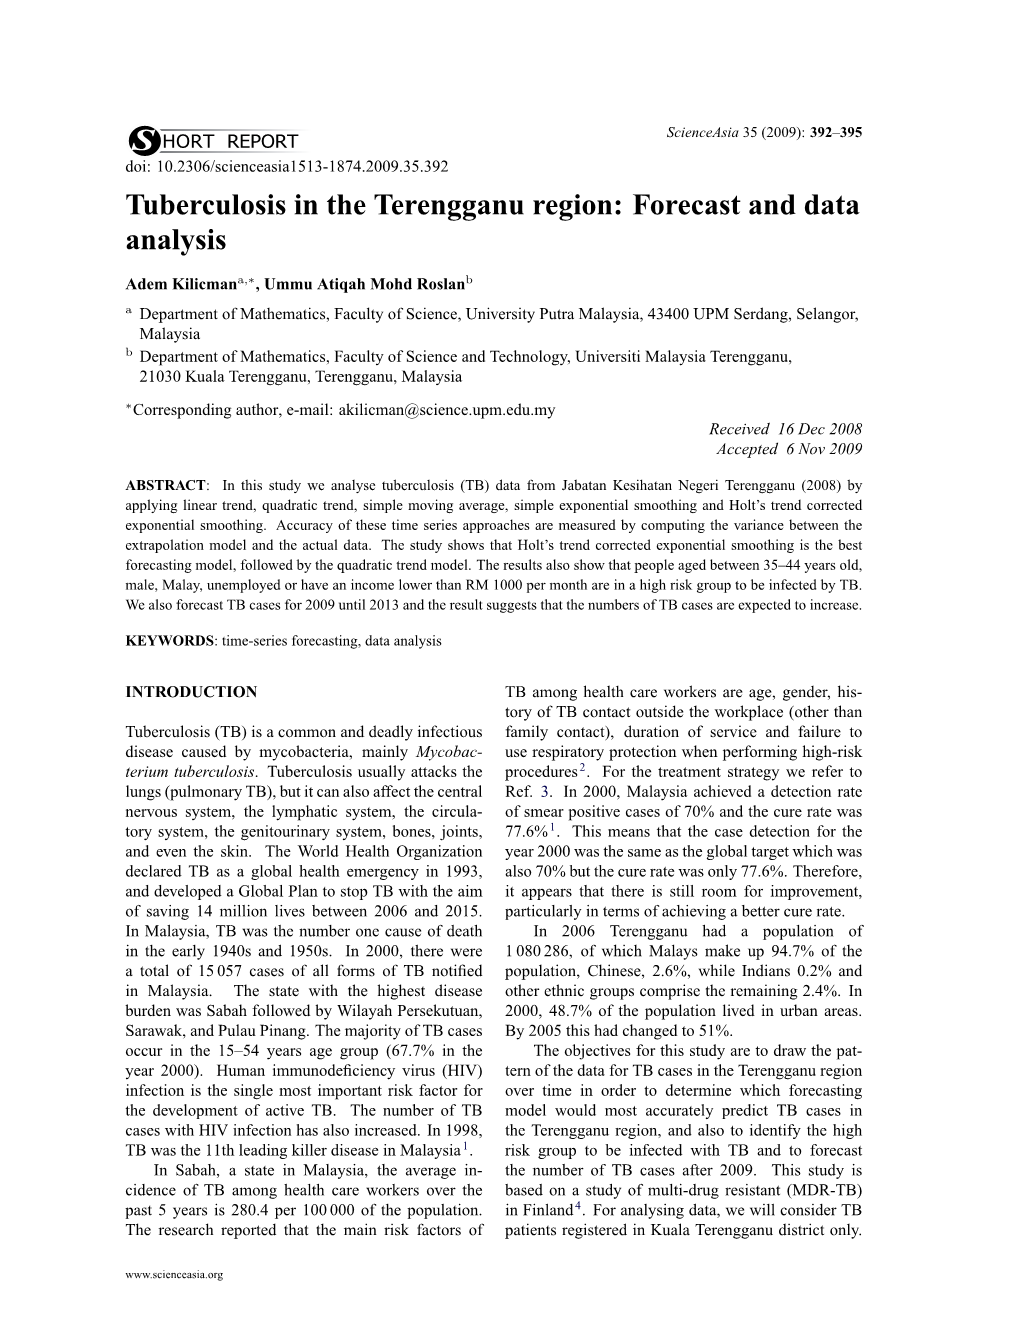 Tuberculosis in the Terengganu Region: Forecast and Data Analysis